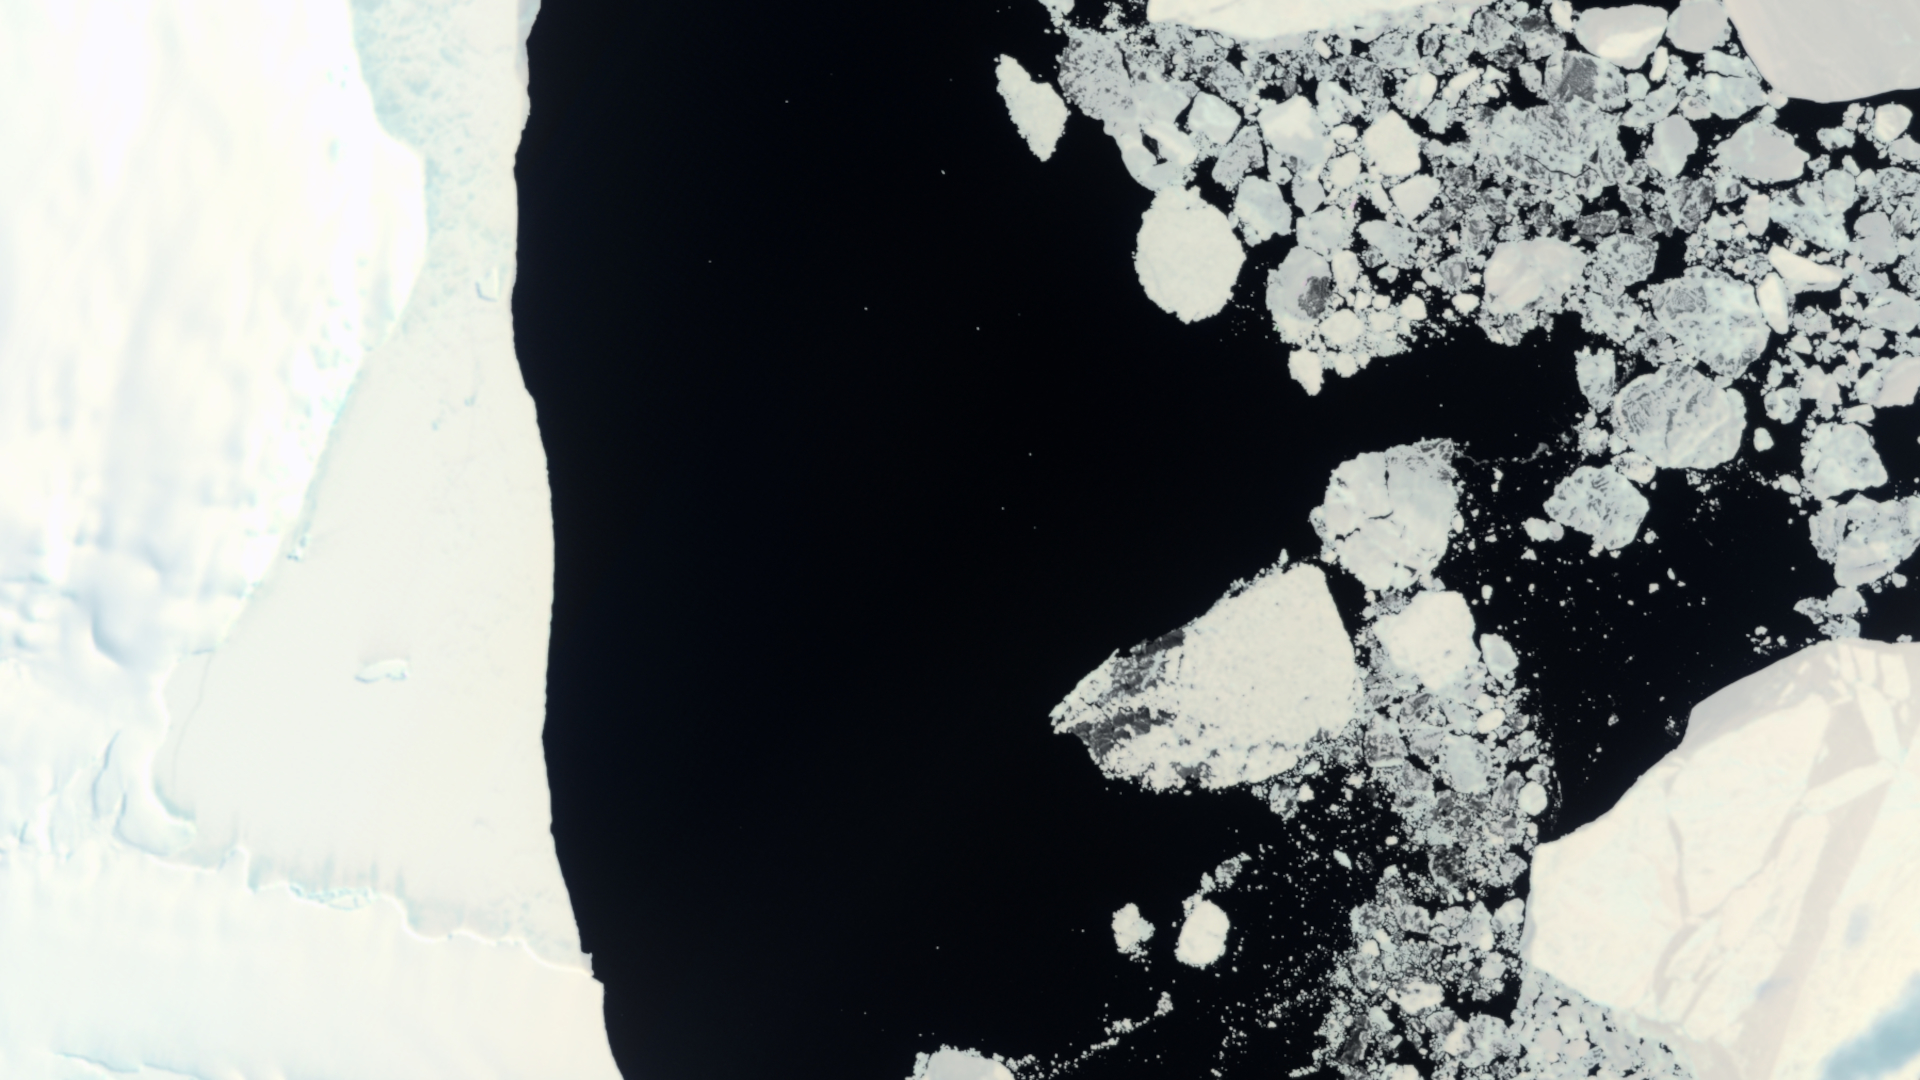 ASI - PRISMA riprende i ghiacci dell’Antartide